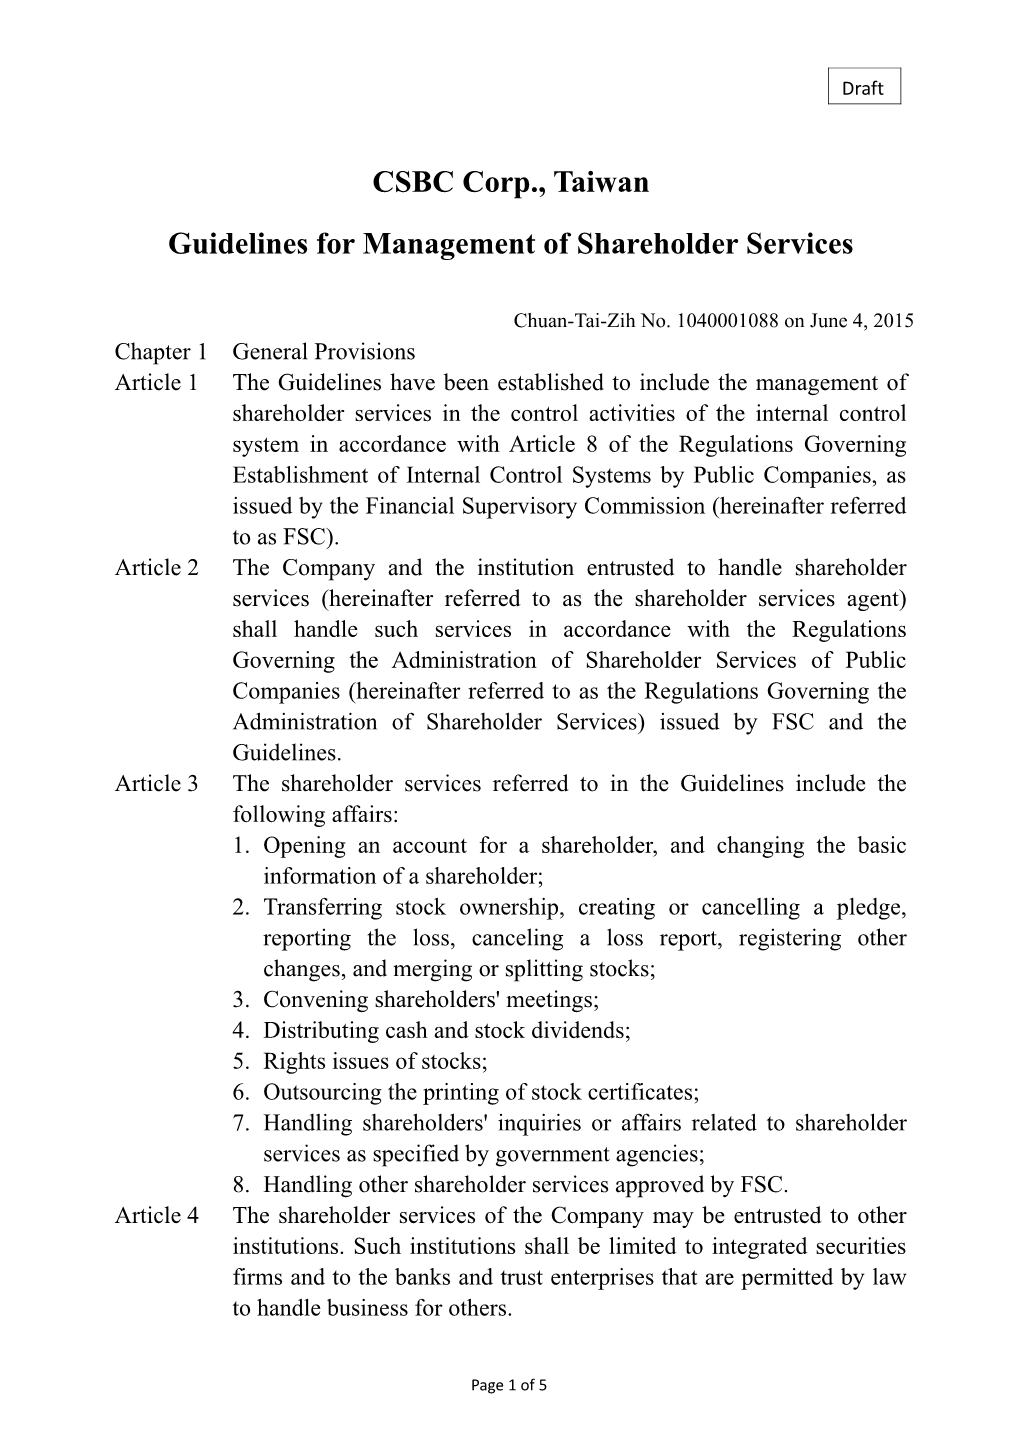 Guidelines for Management of Shareholder Services